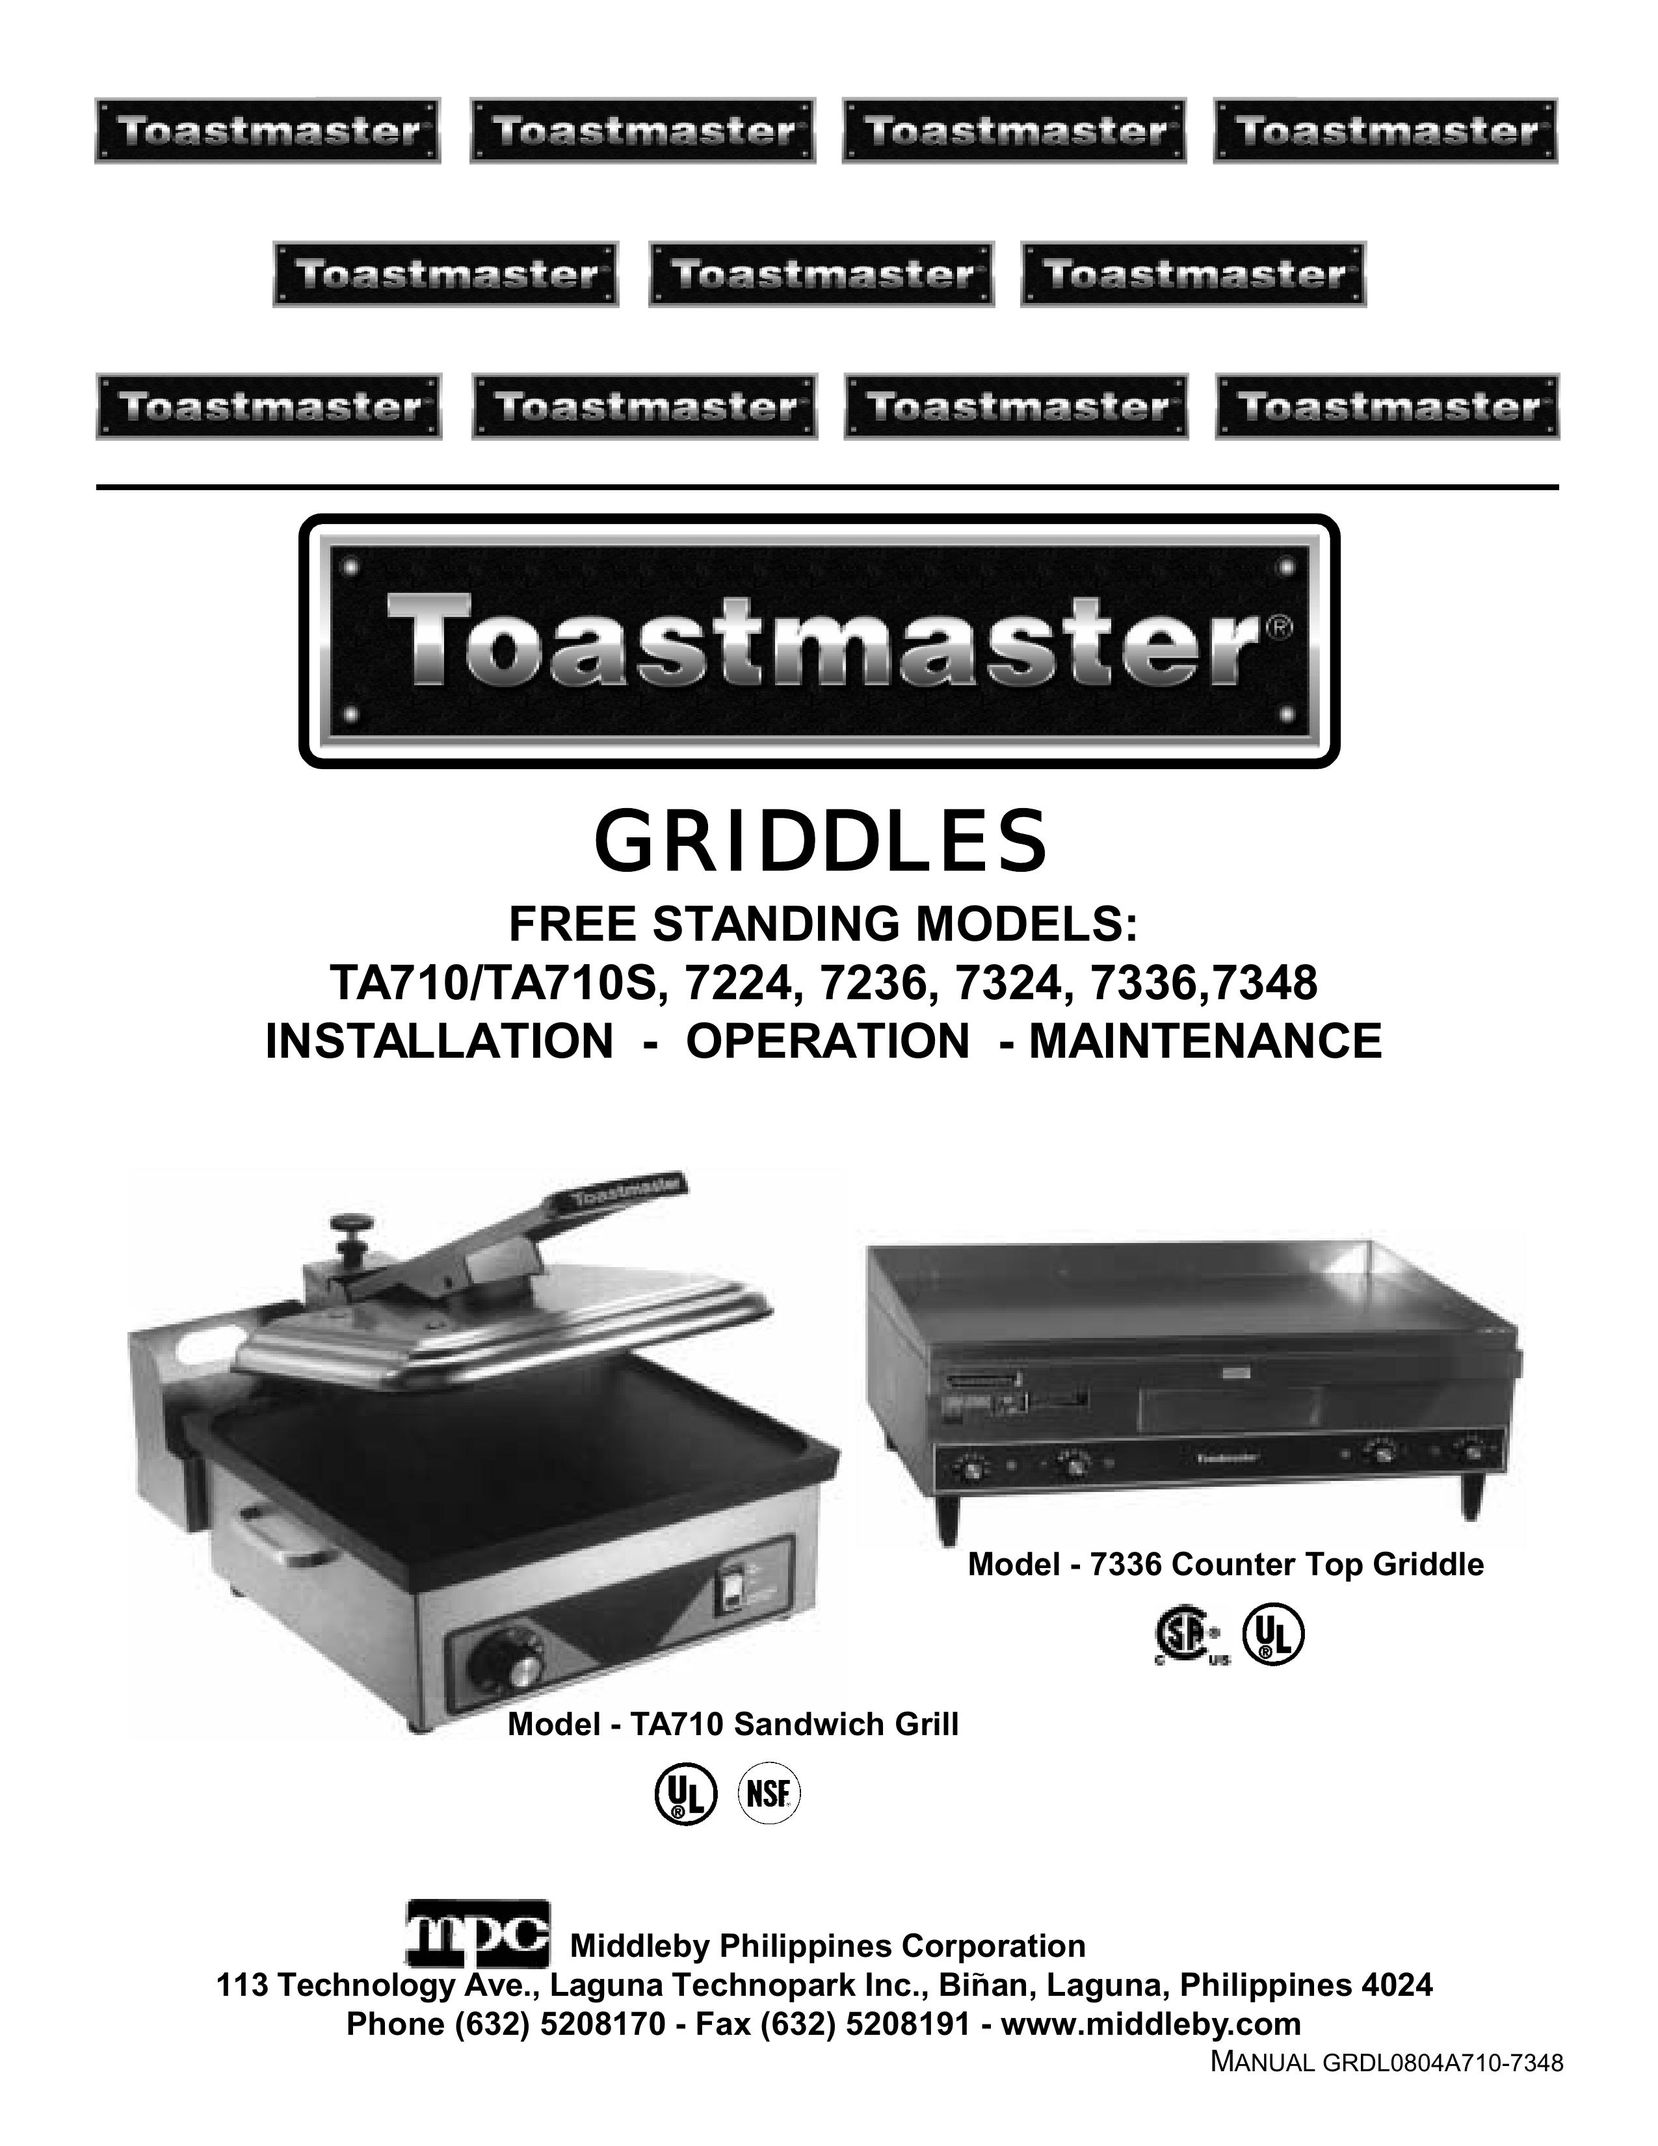 Toastmaster 7324 Griddle User Manual